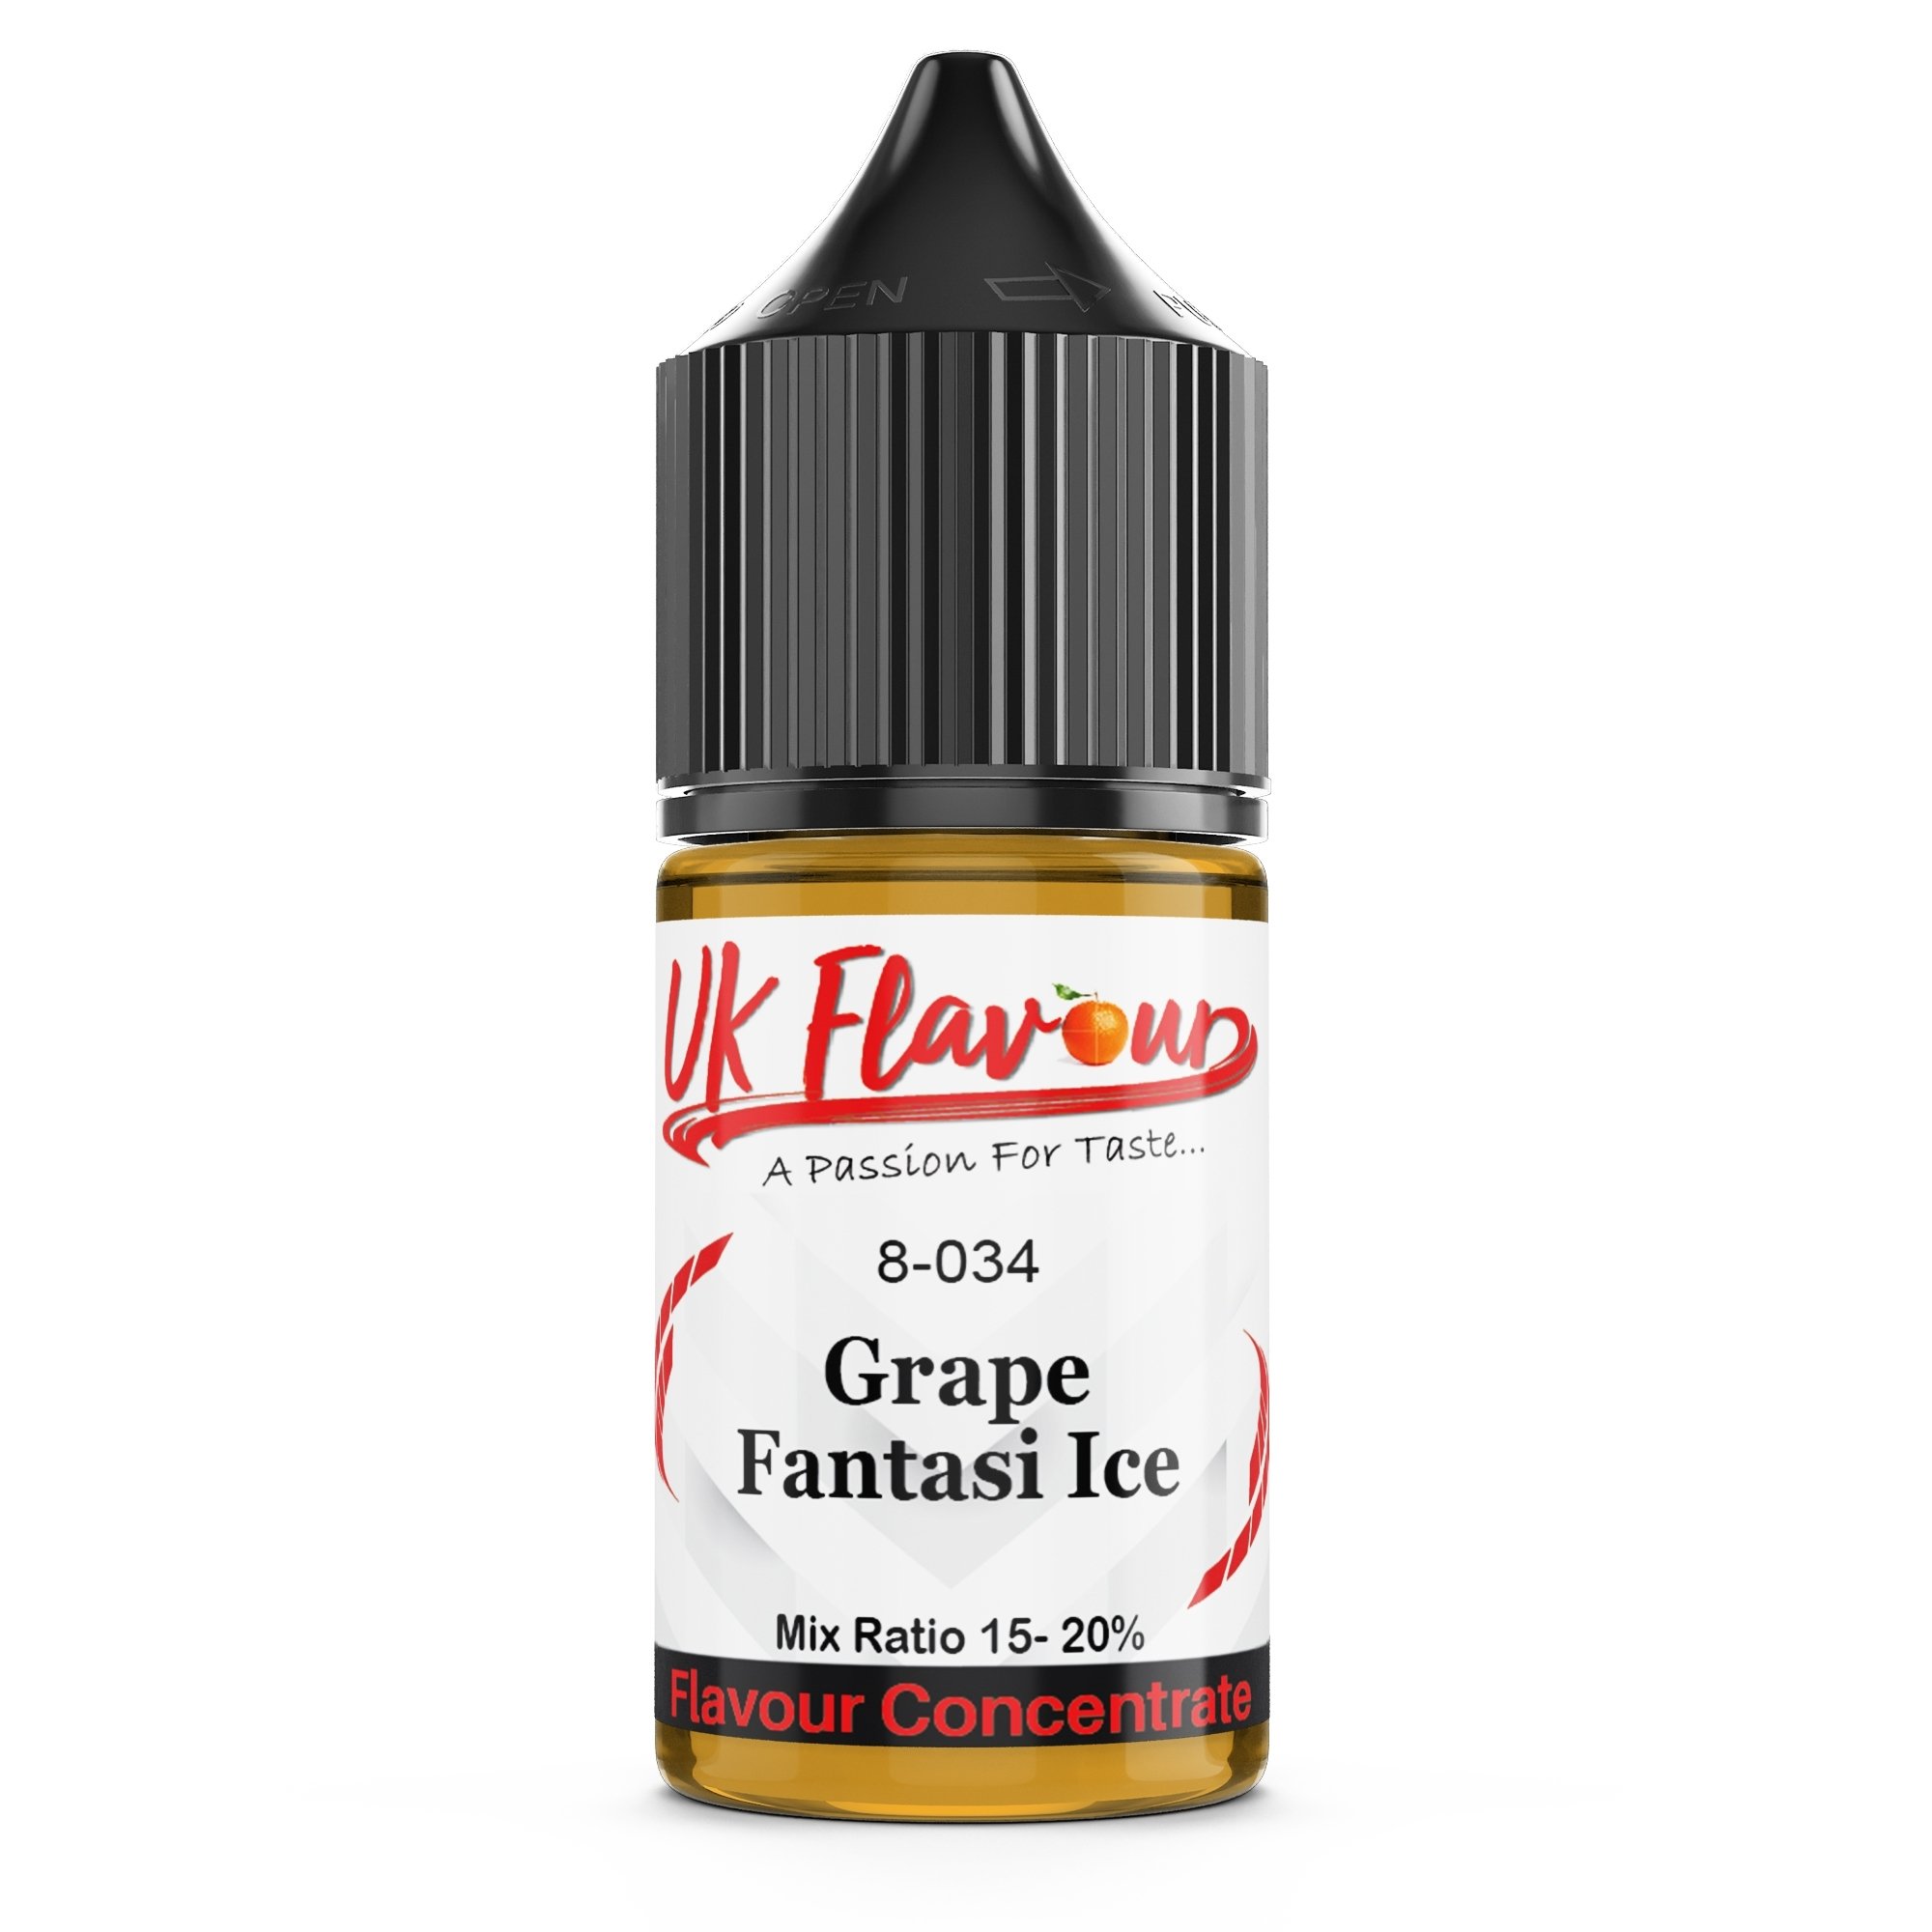 UK Flavour - Flavour concentrates 30ml Fantasi Grape Ice